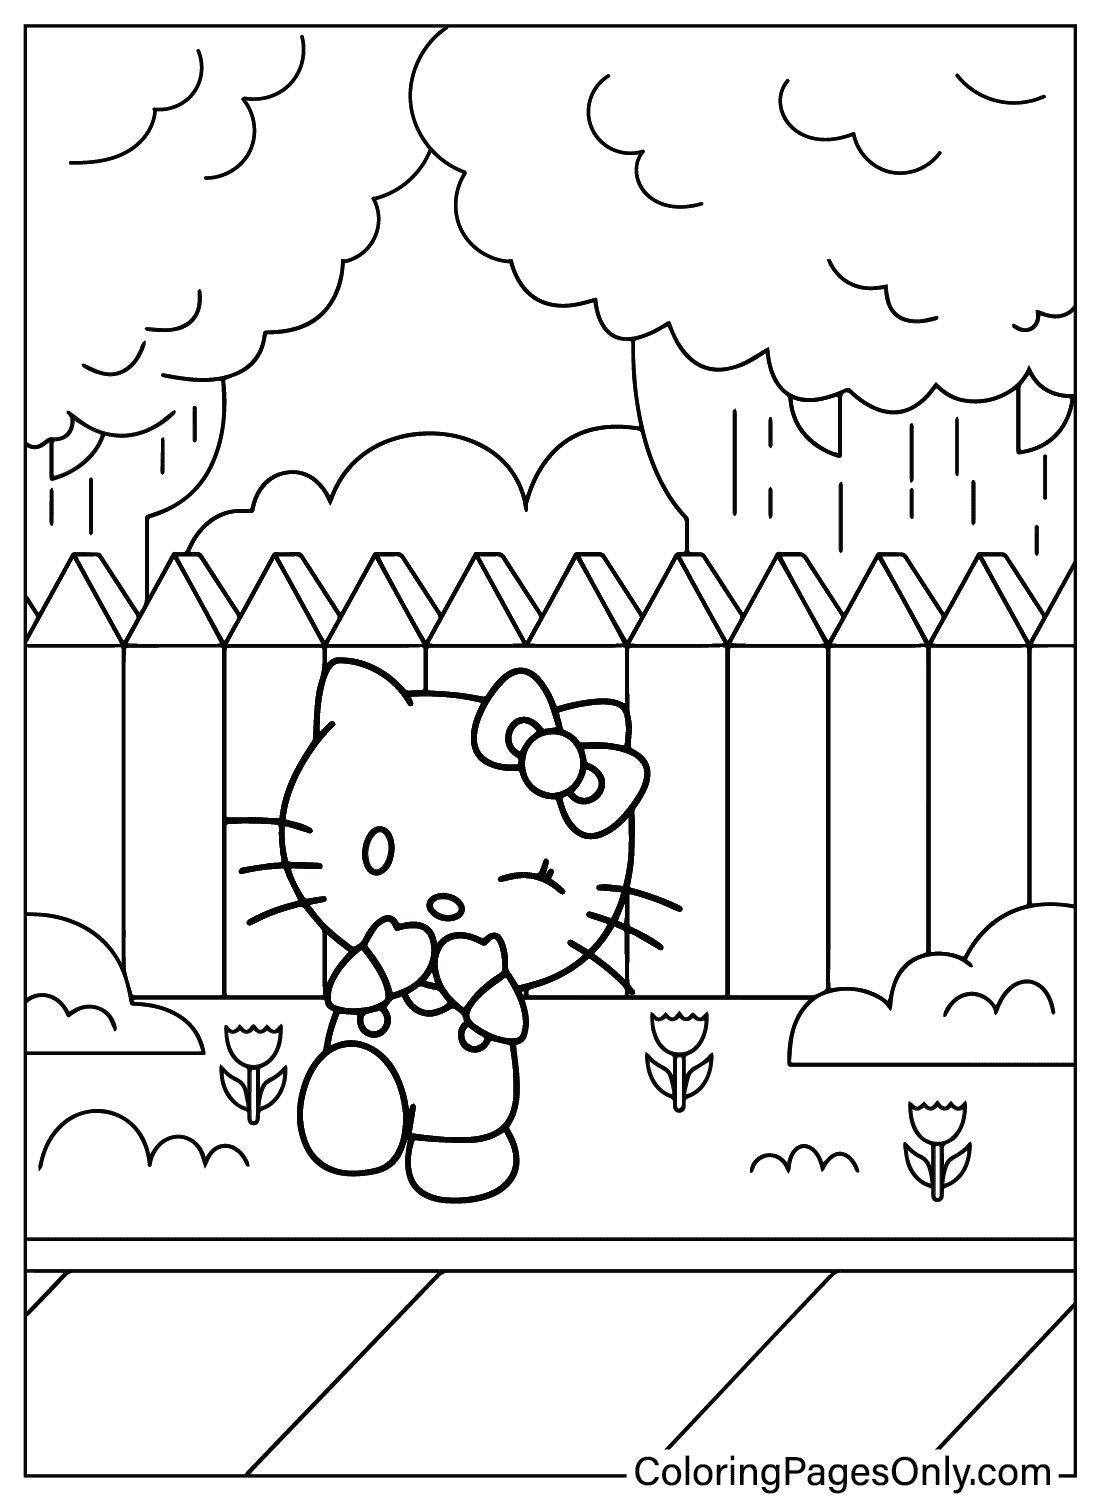 Página para colorear de Hello Kitty para imprimir de Hello Kitty